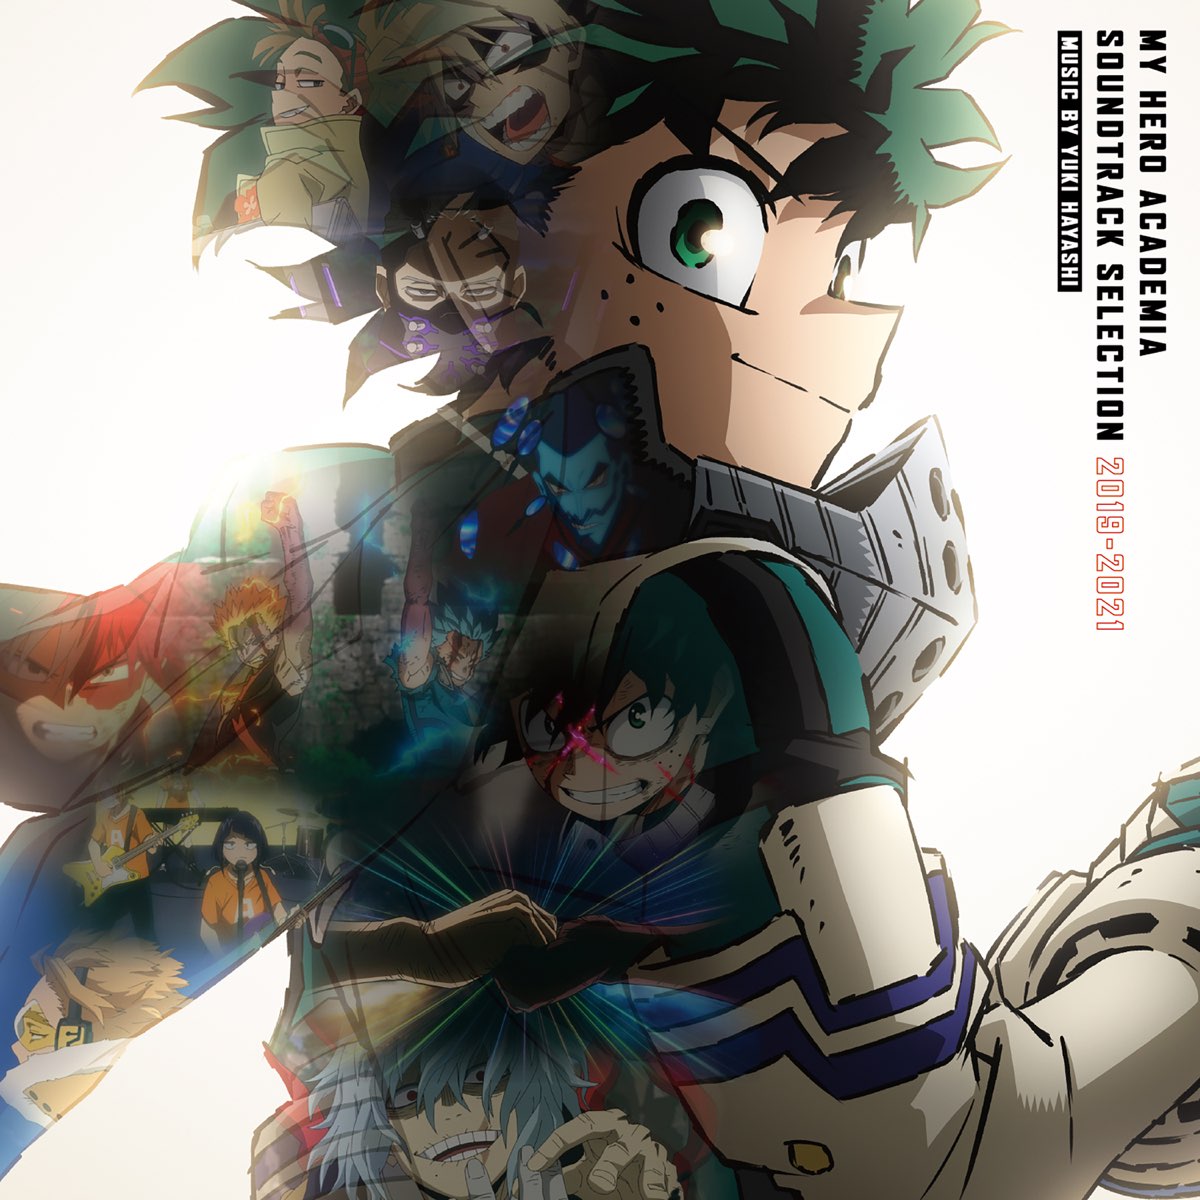 My Hero Academia: Season 6 (Original Series Soundtrack EP) - EP by